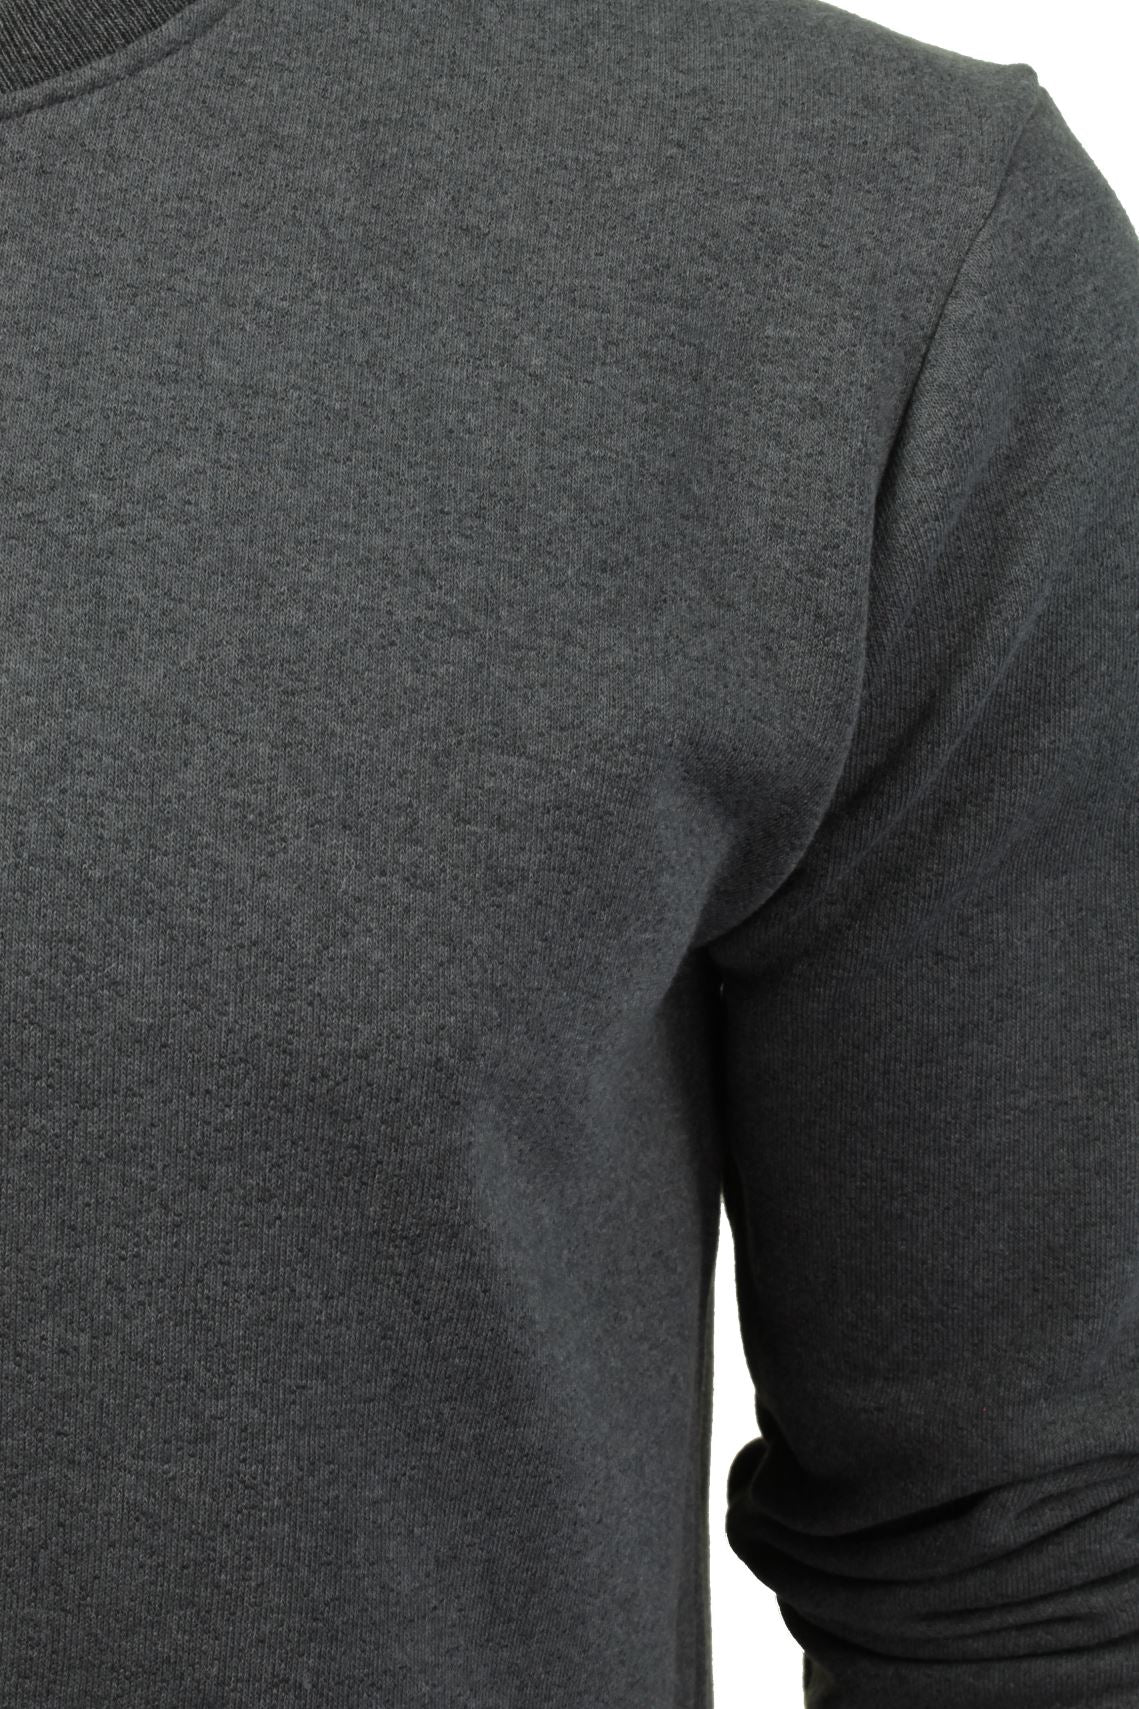 Mens Crew Neck Sweatshirt Jumper by Xact Long Sleeved (Dark Grey)-2